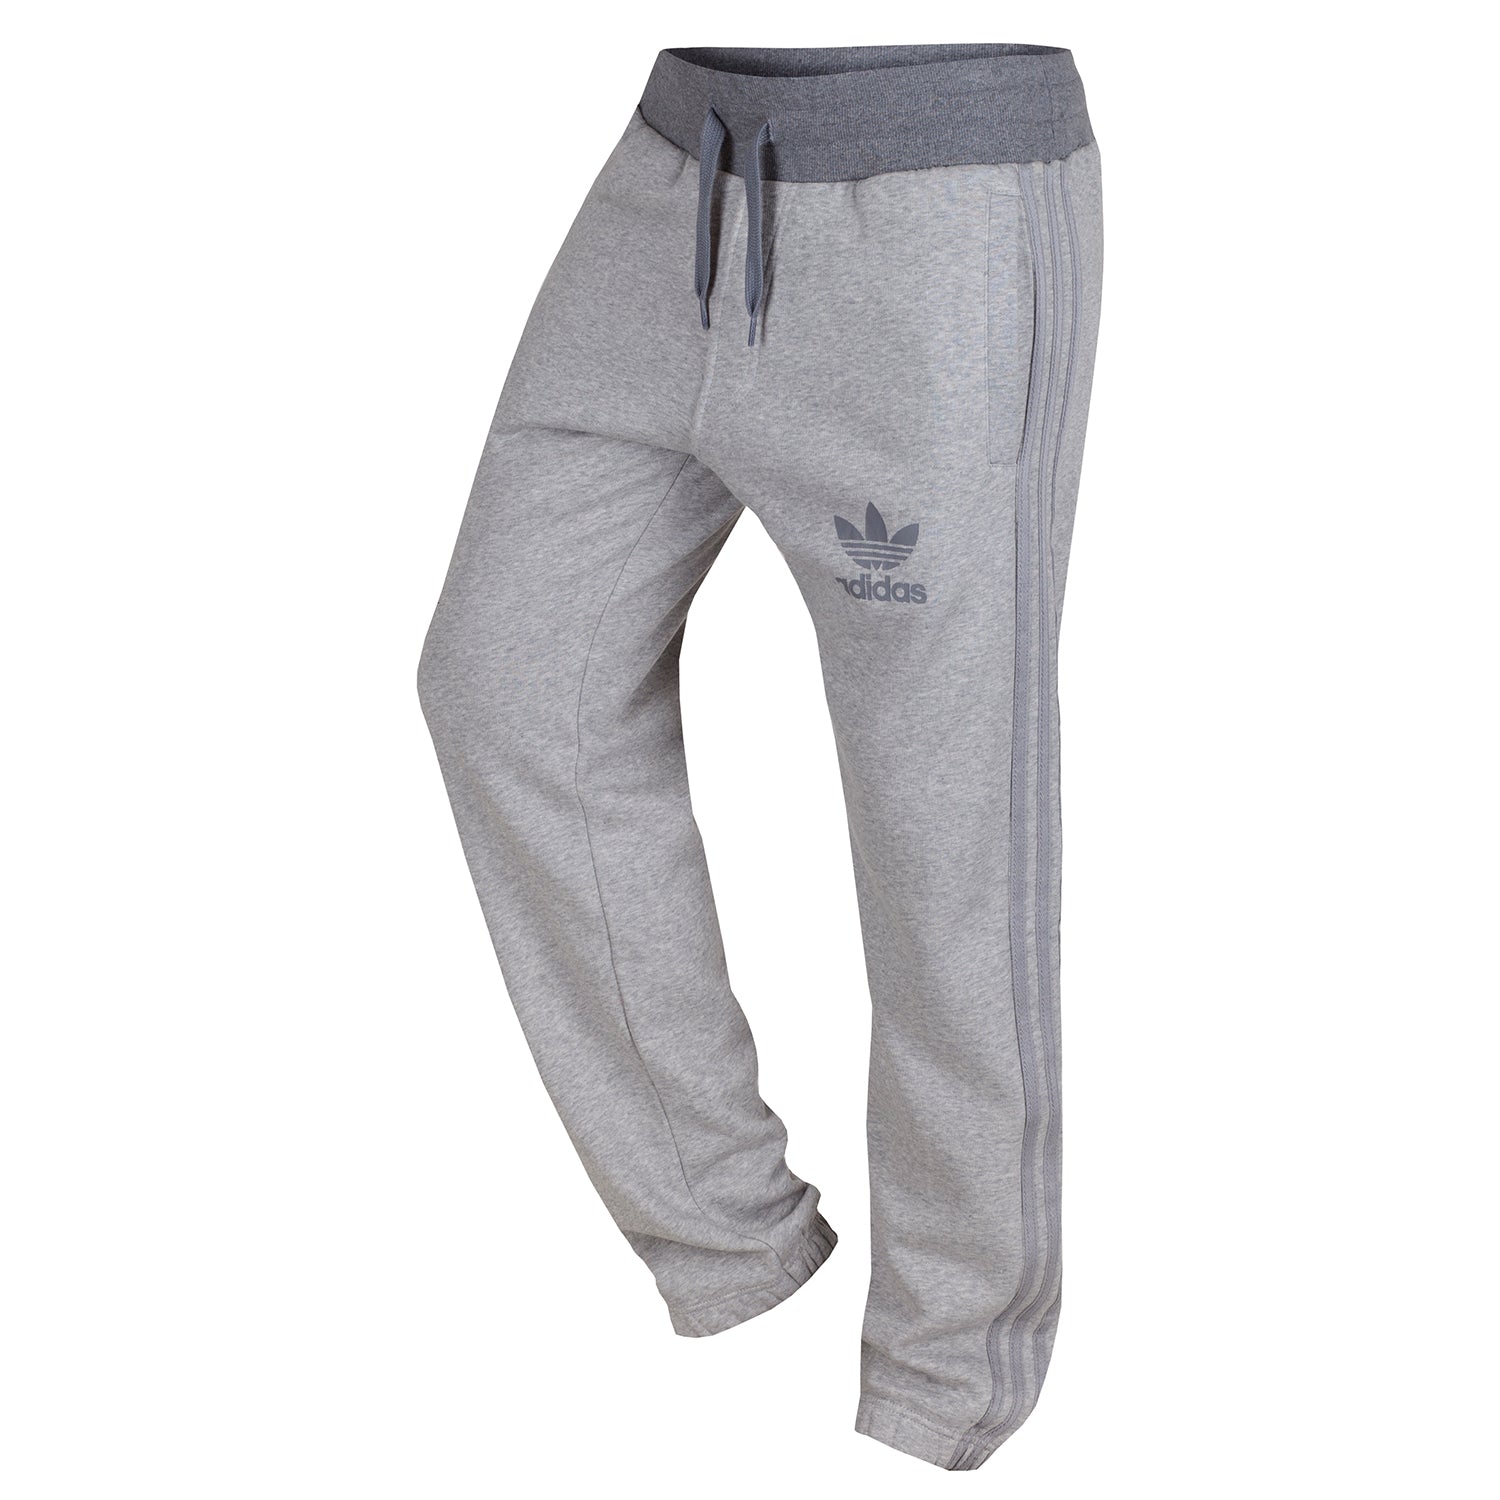 mens grey adidas fleece tracksuit bottoms